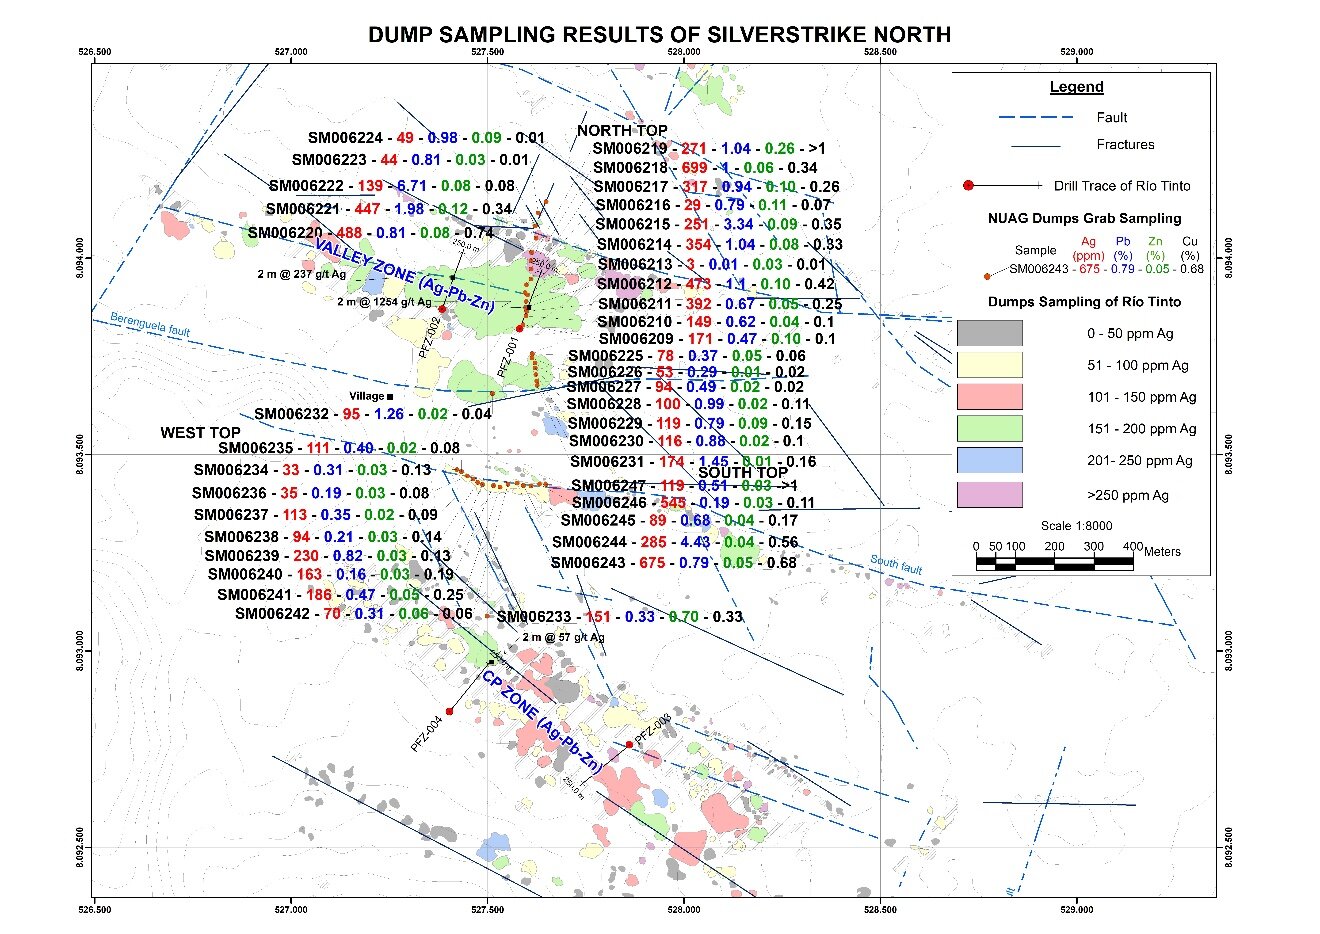 Figure 2: Mining Dump Sampling Results for Silverstrike North